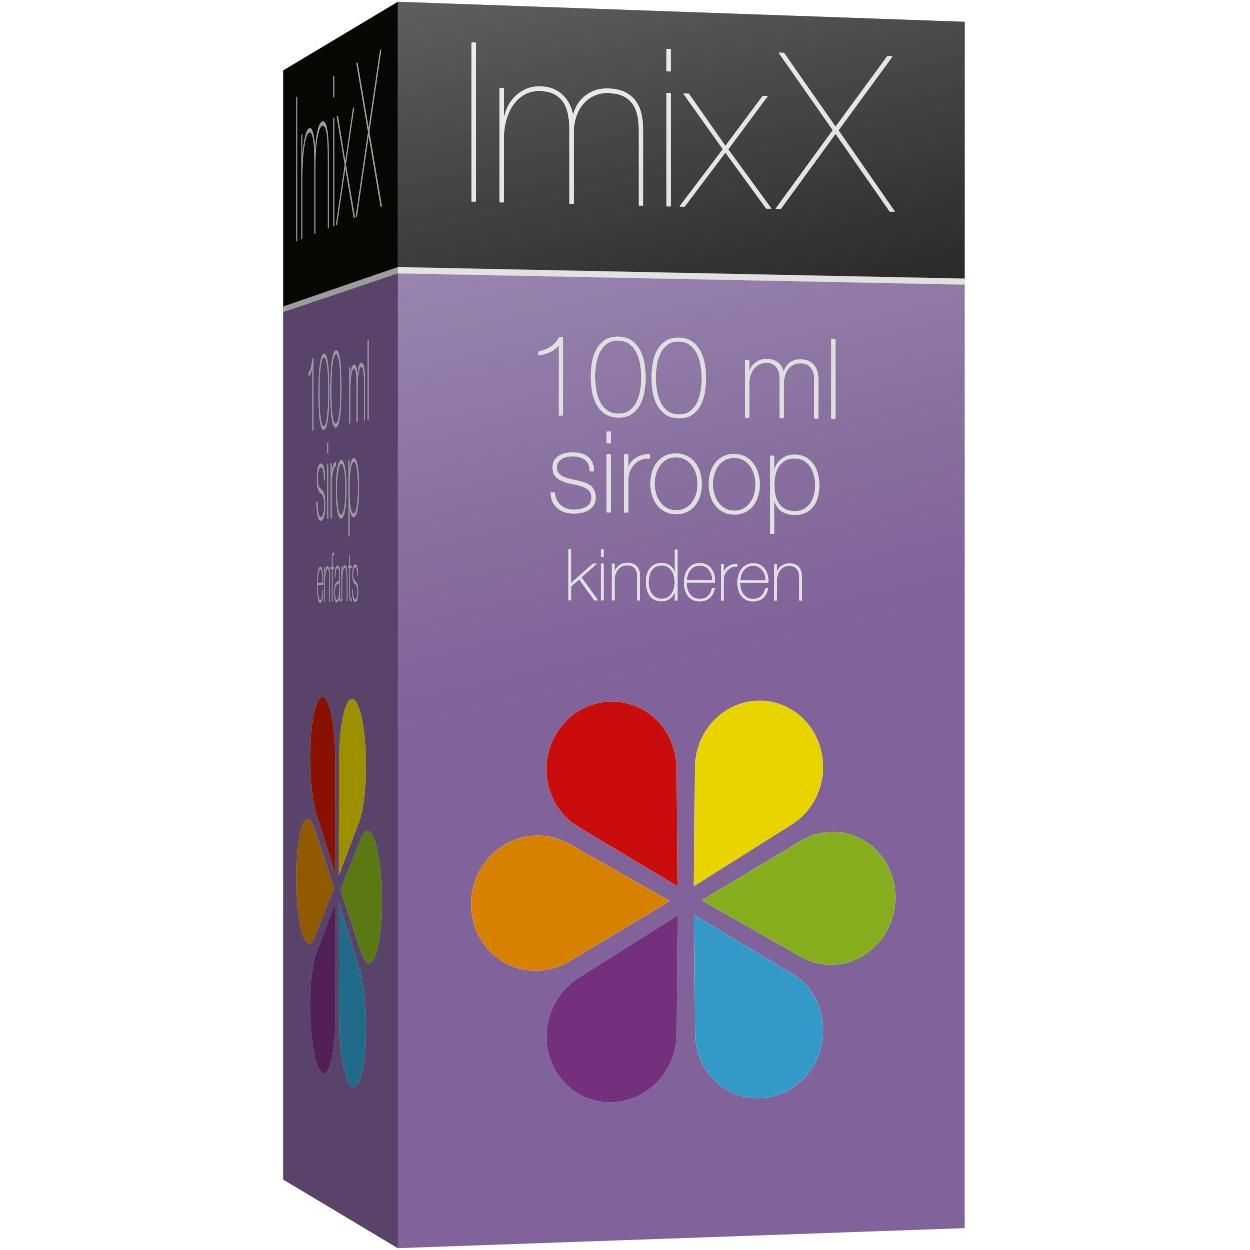 Imixx siroop - 100 ml